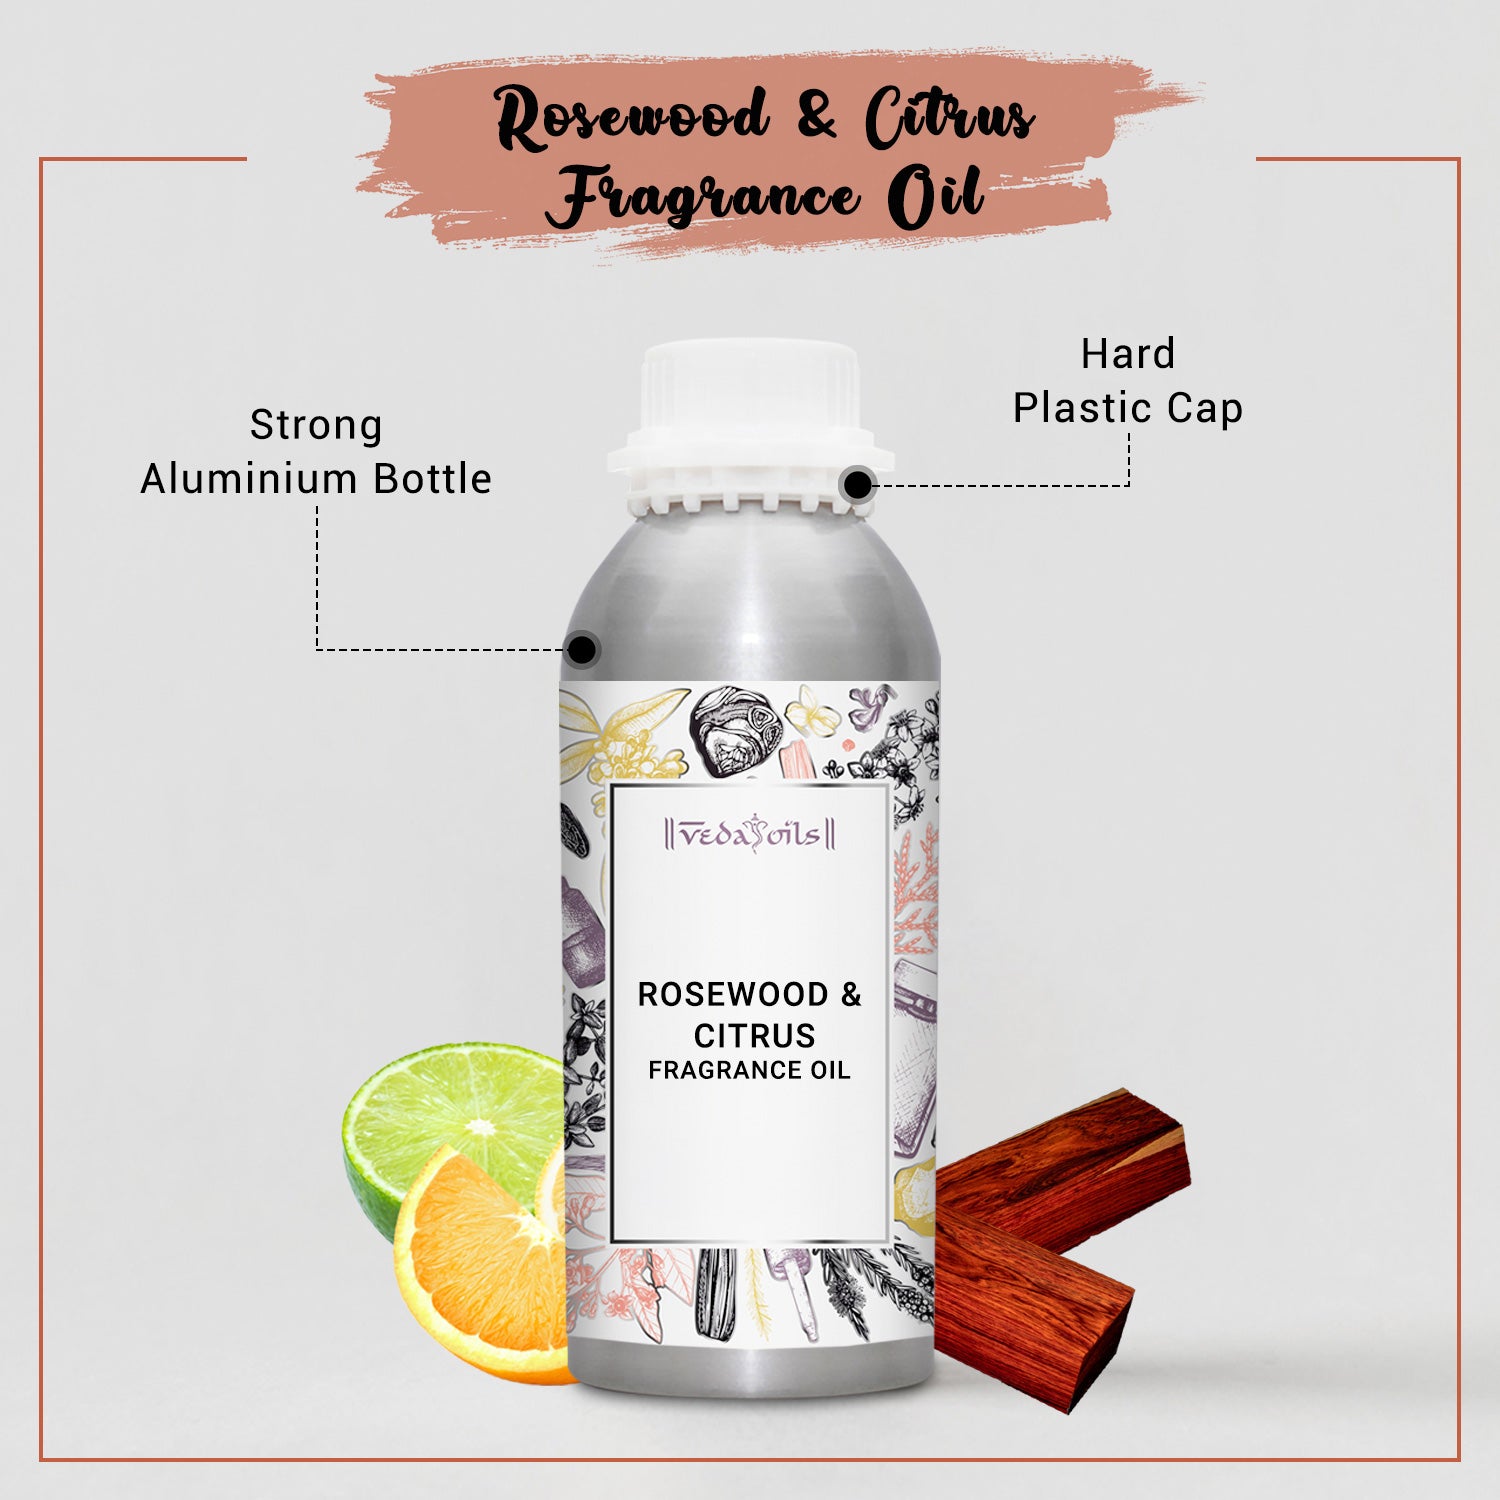 Rosewood & Citrus Fragrance Oil